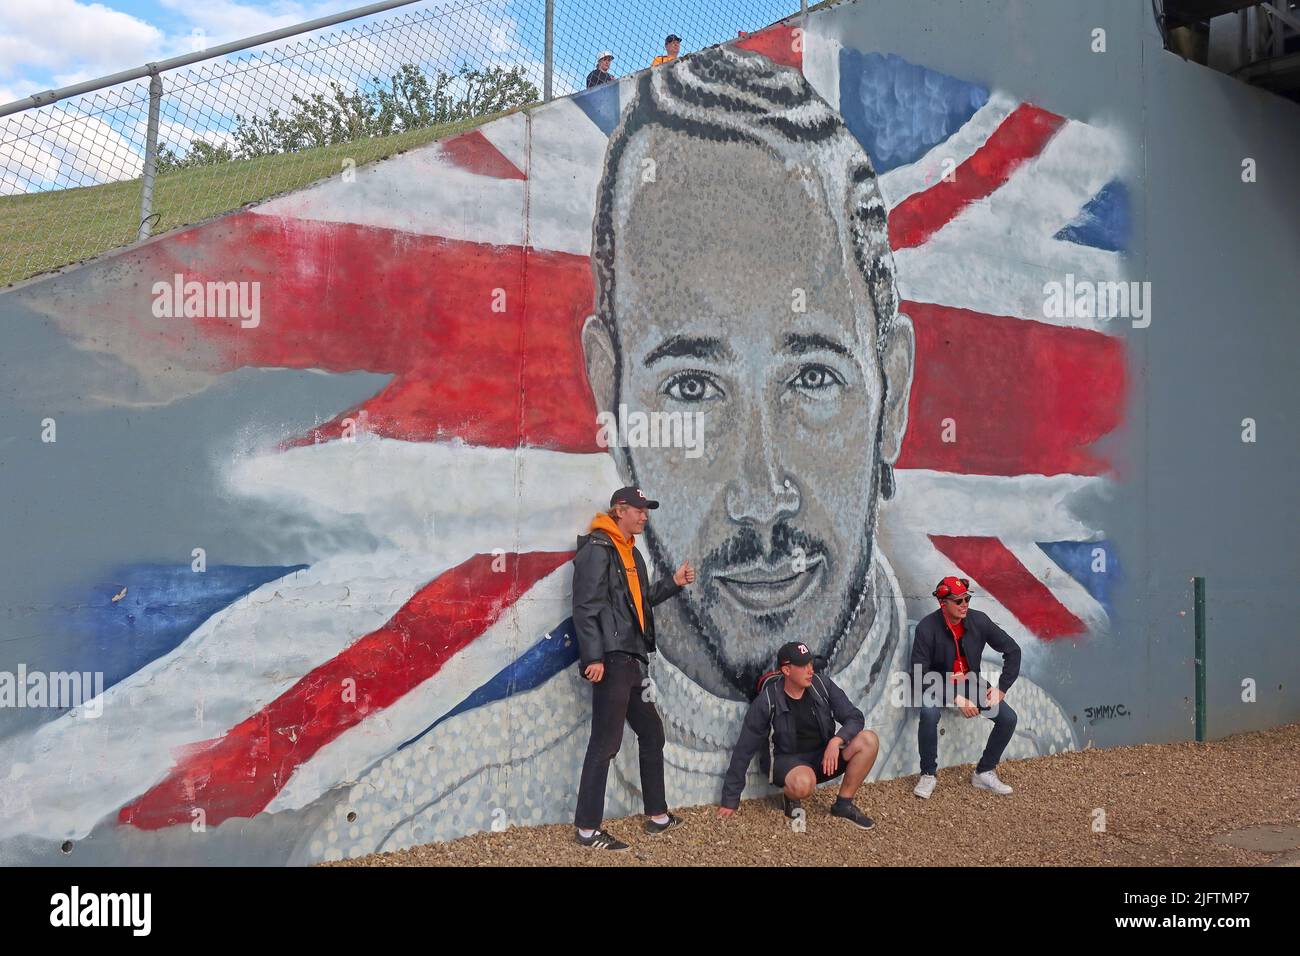 Lewis Hamilton Mural artwork, British Grand Prix Formula1 F1 Silverstone artwork, with fans posing Stock Photo